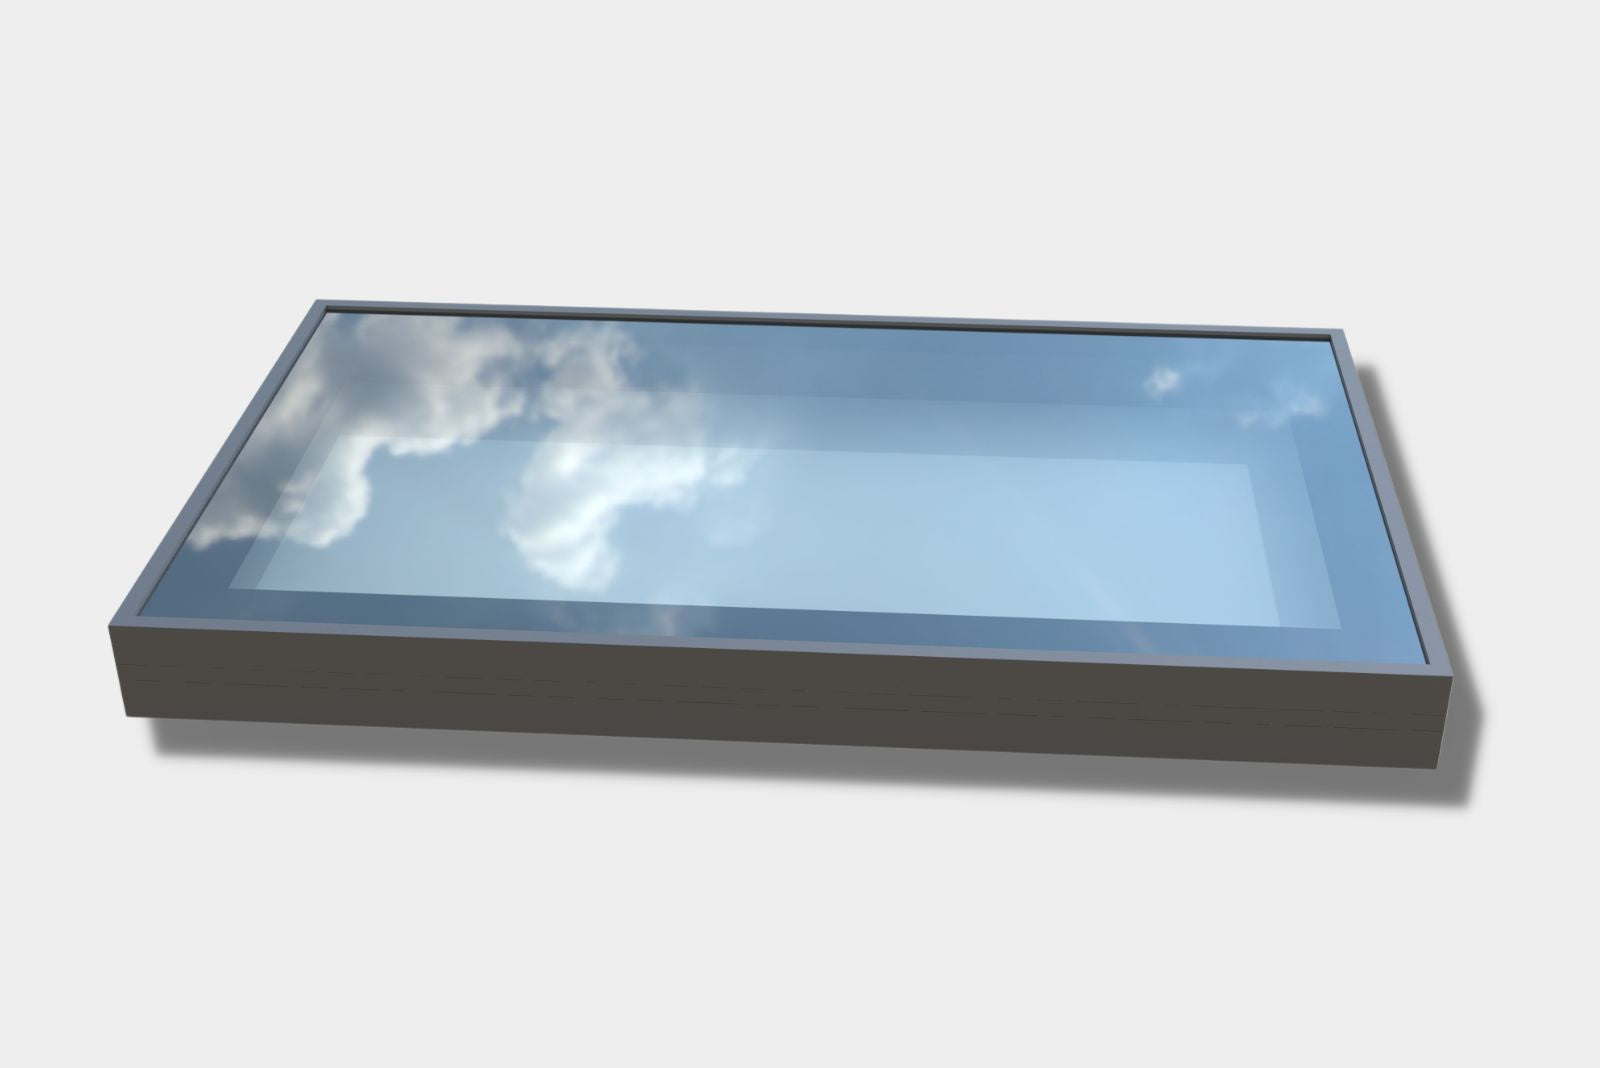 Framed Skylight 1000 x 2000 mm – Double glazed